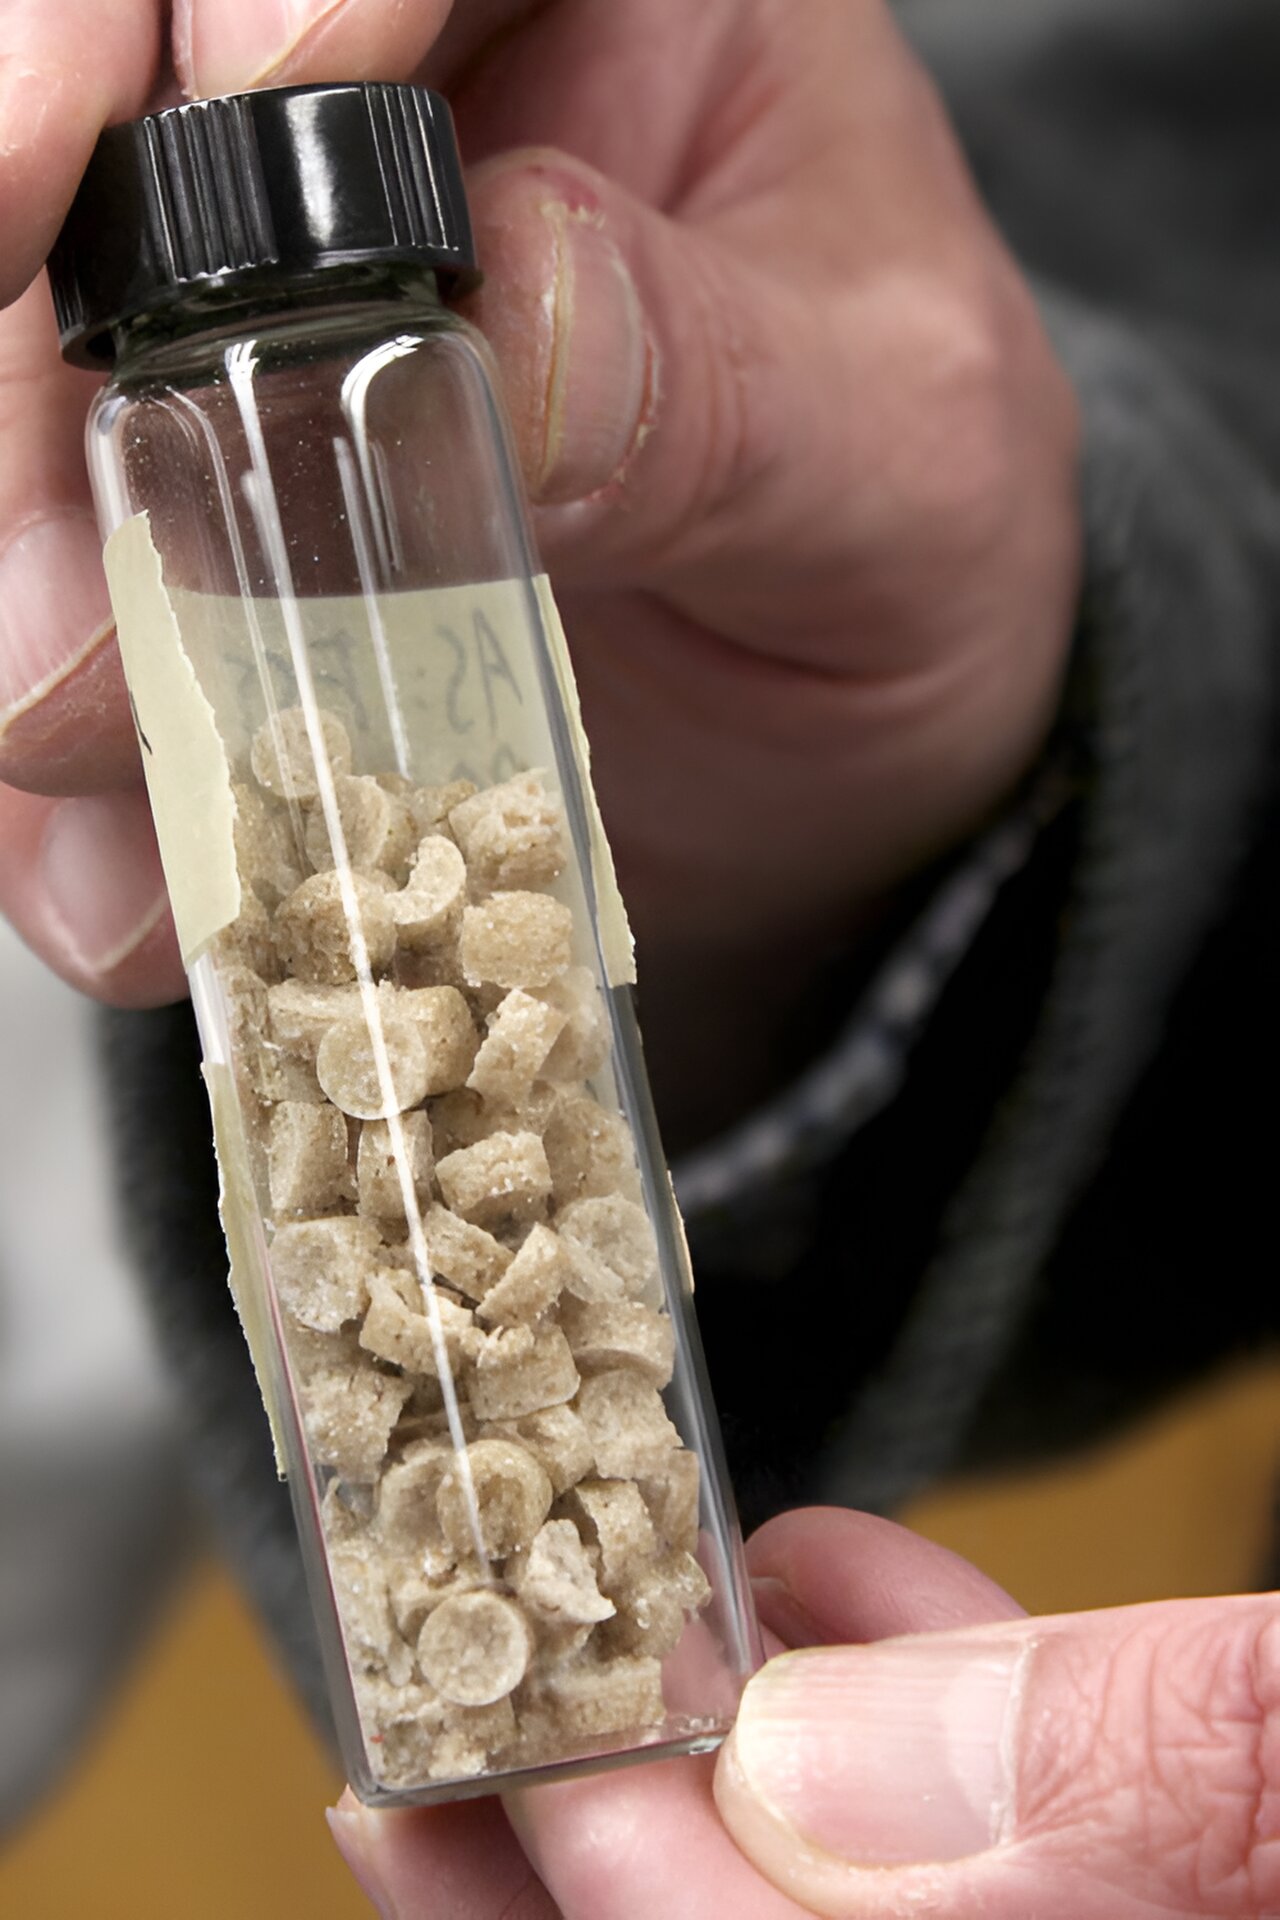 Researchers develop eggshell 'bioplastic' pellet as sustainable alternative to plastic